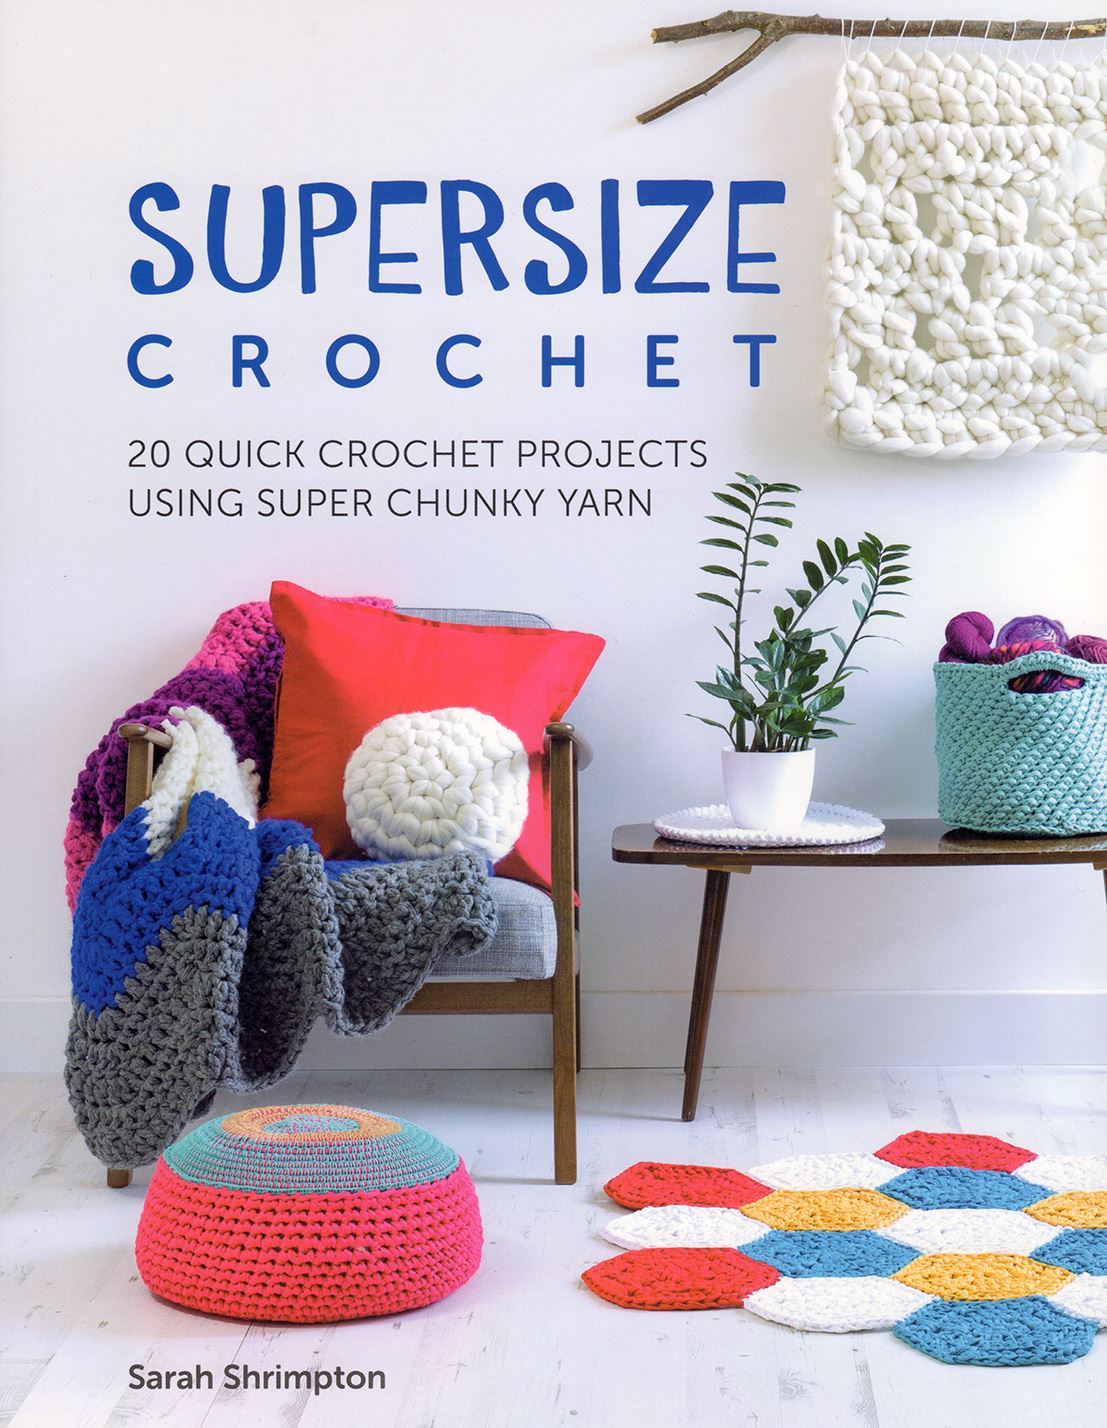 Supersize Crochet - Pattern Book by Sarah Shrimpton